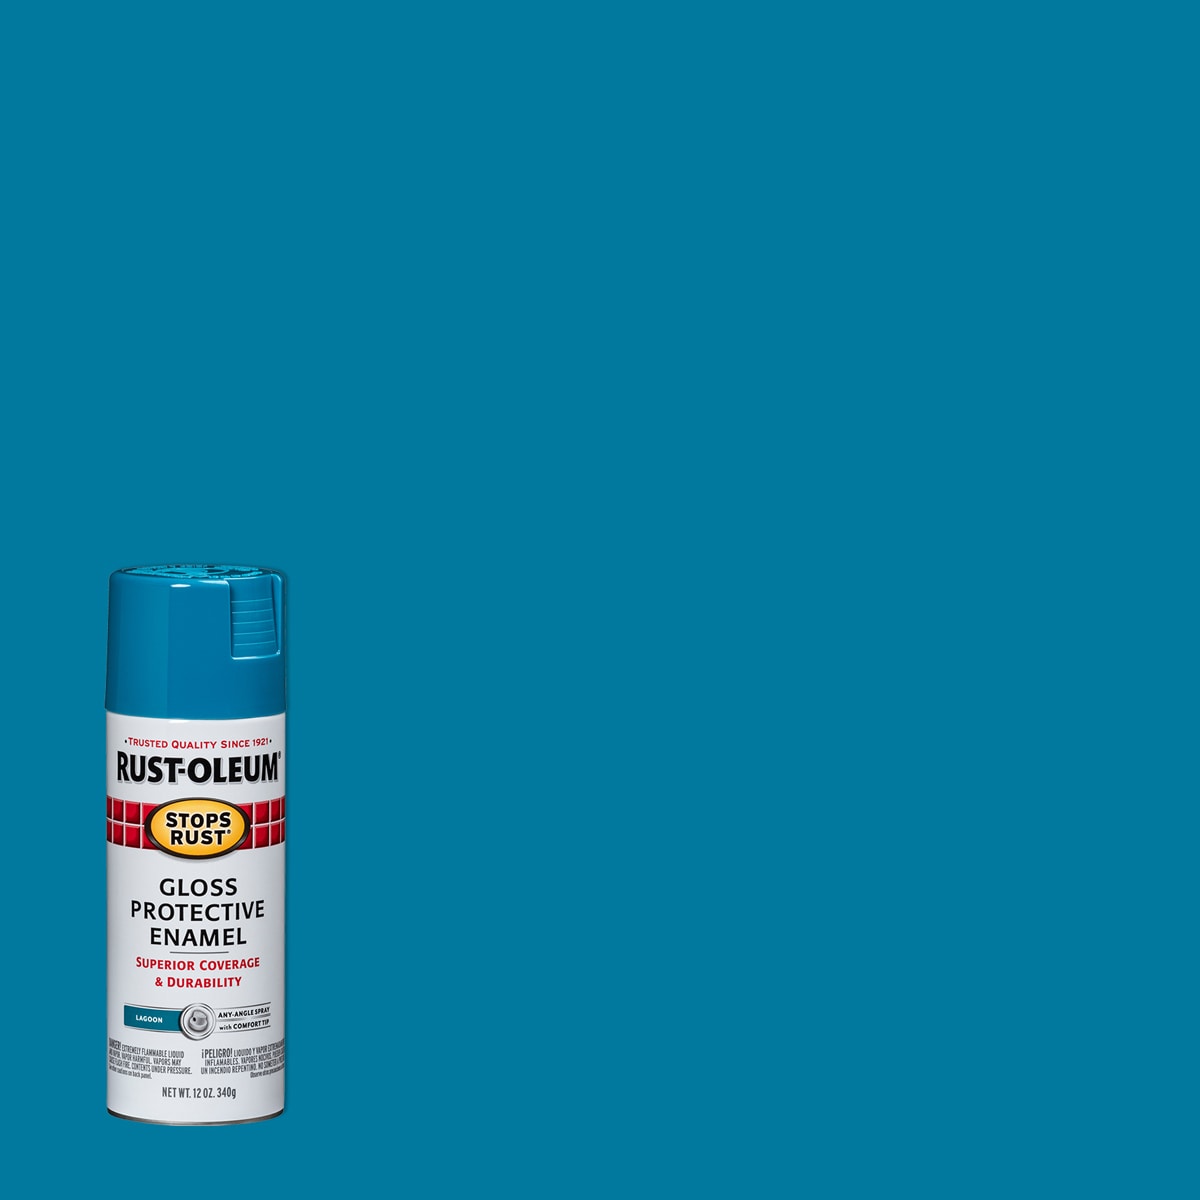 Rust-Oleum Stops Rust Matte Clear Spray Paint (NET WT. 12-oz)